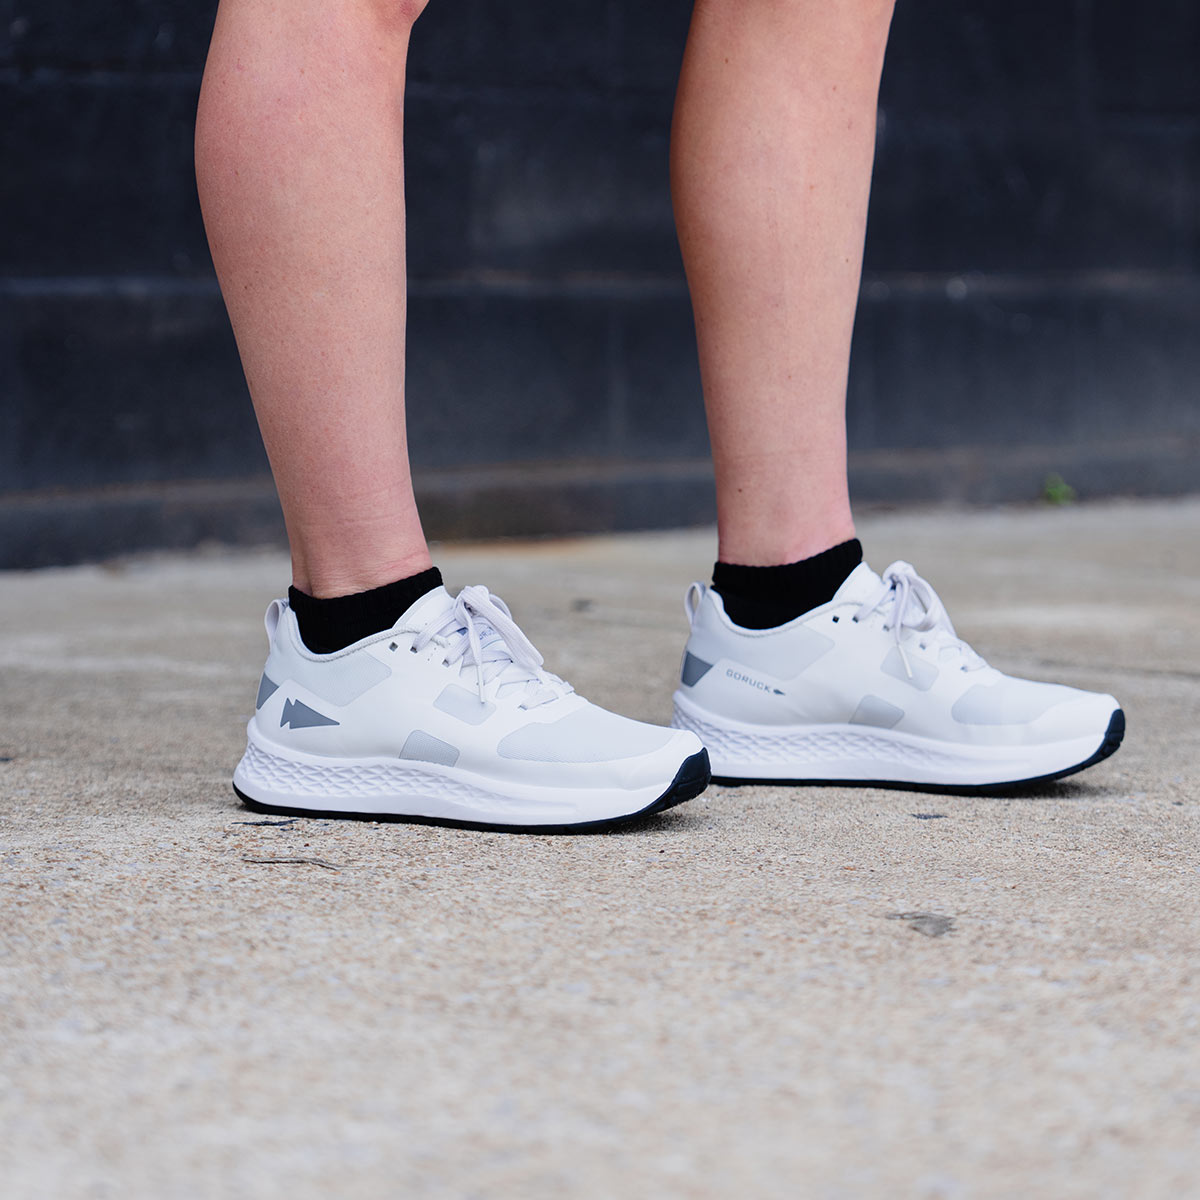 Women's Rough Runners - Light Grey + White